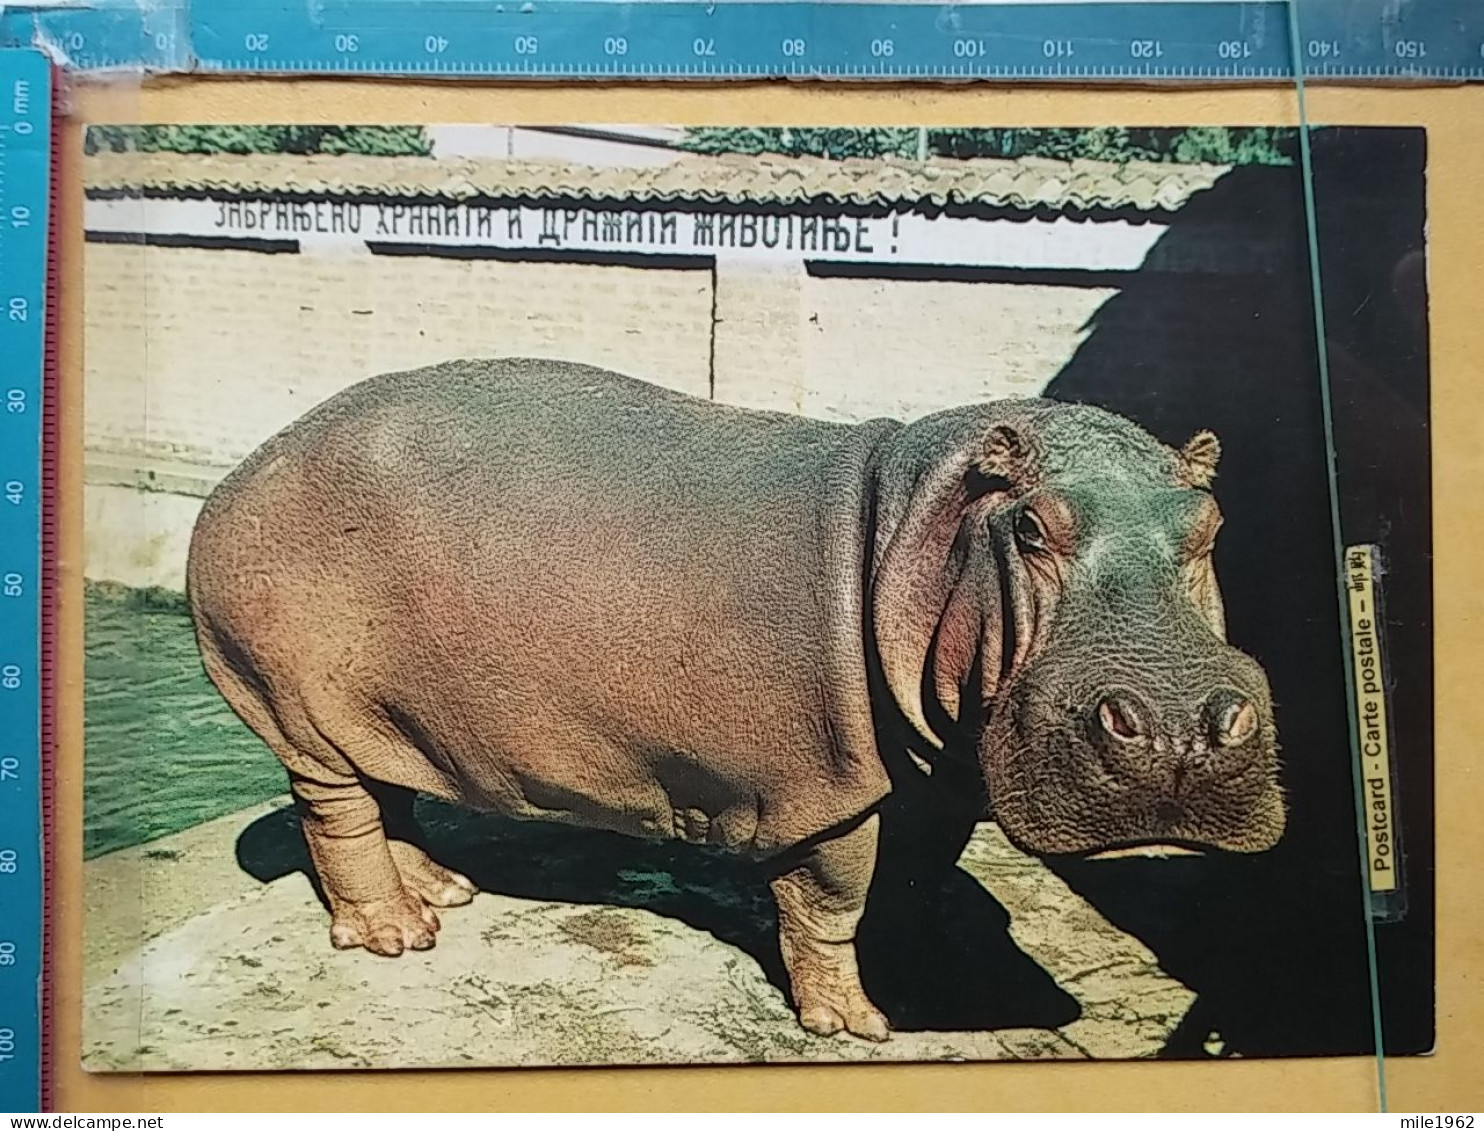 KOV 506-58 - HIPPOPOTUMUS,  - Hippopotames